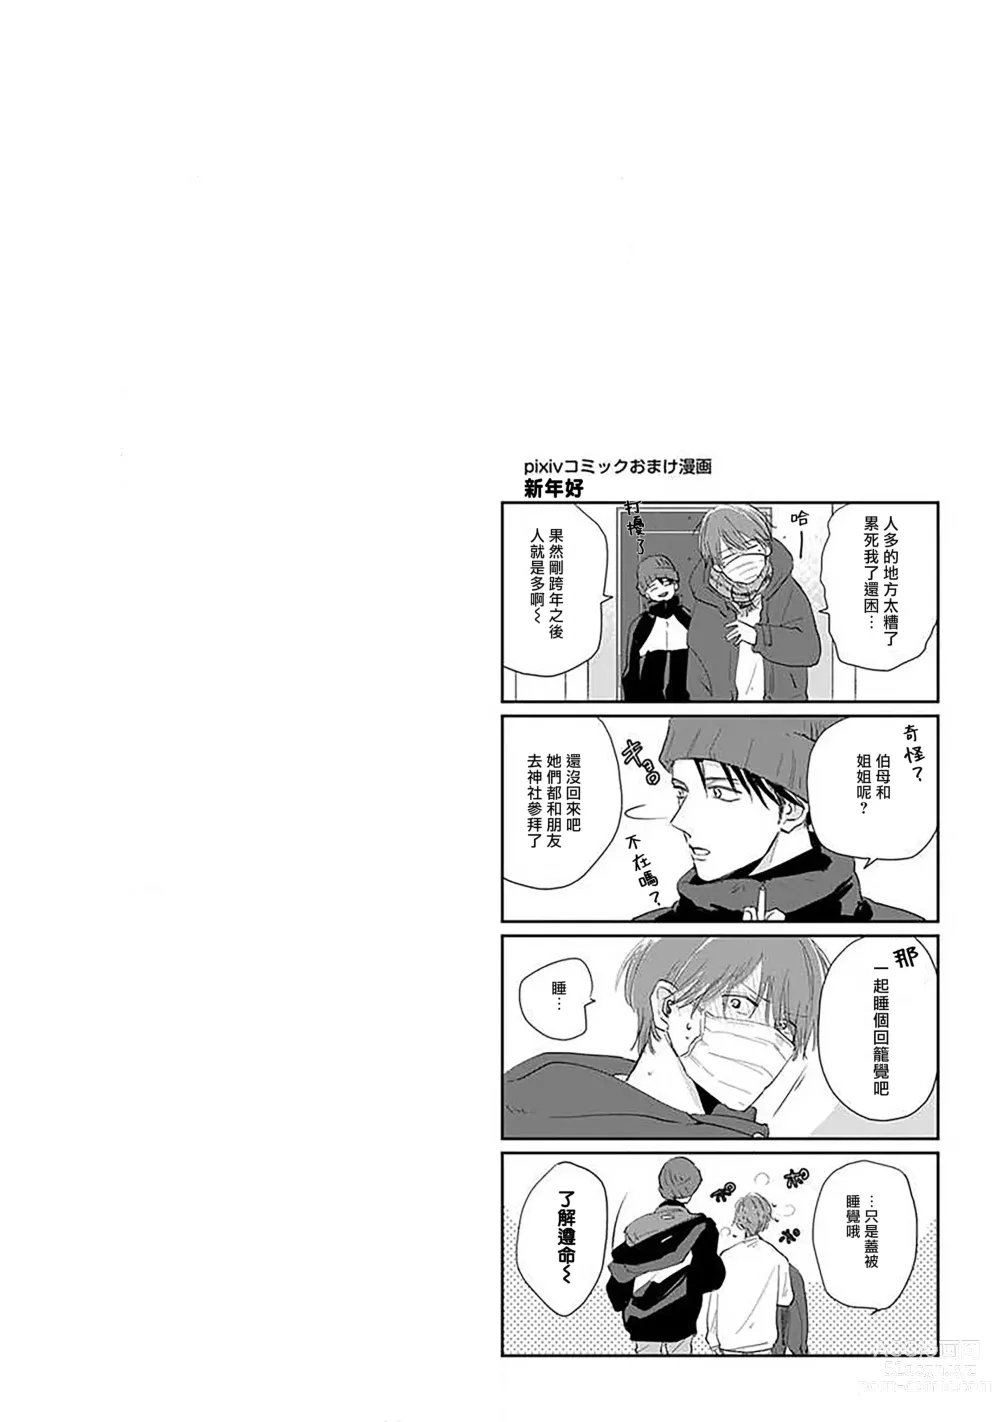 Page 218 of manga 口罩男子明明不想恋爱2 Ch. 11-19 番外“文化祭之夜” + 其他番外